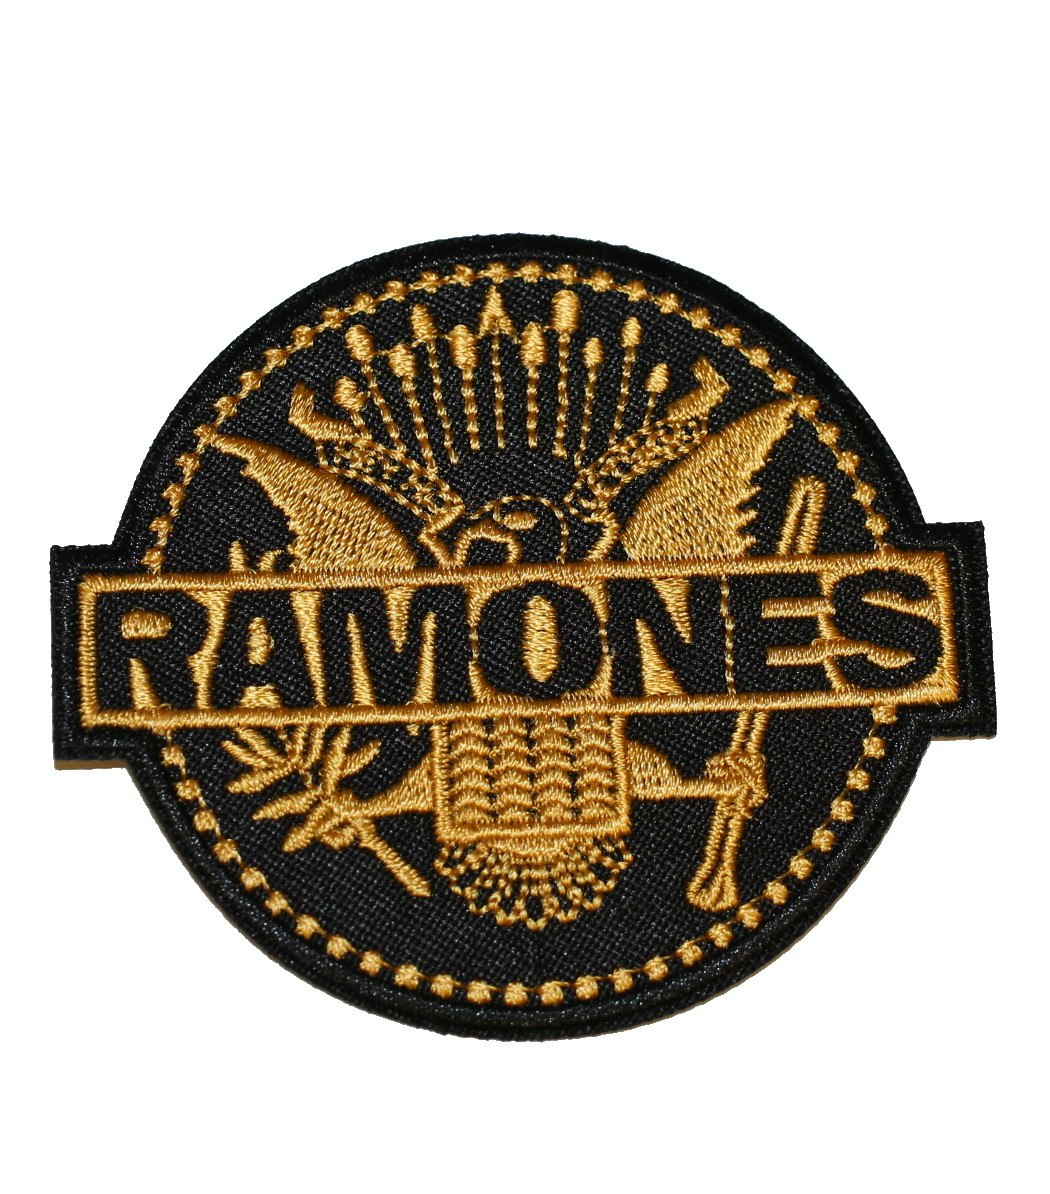 Ramones gold logo patch